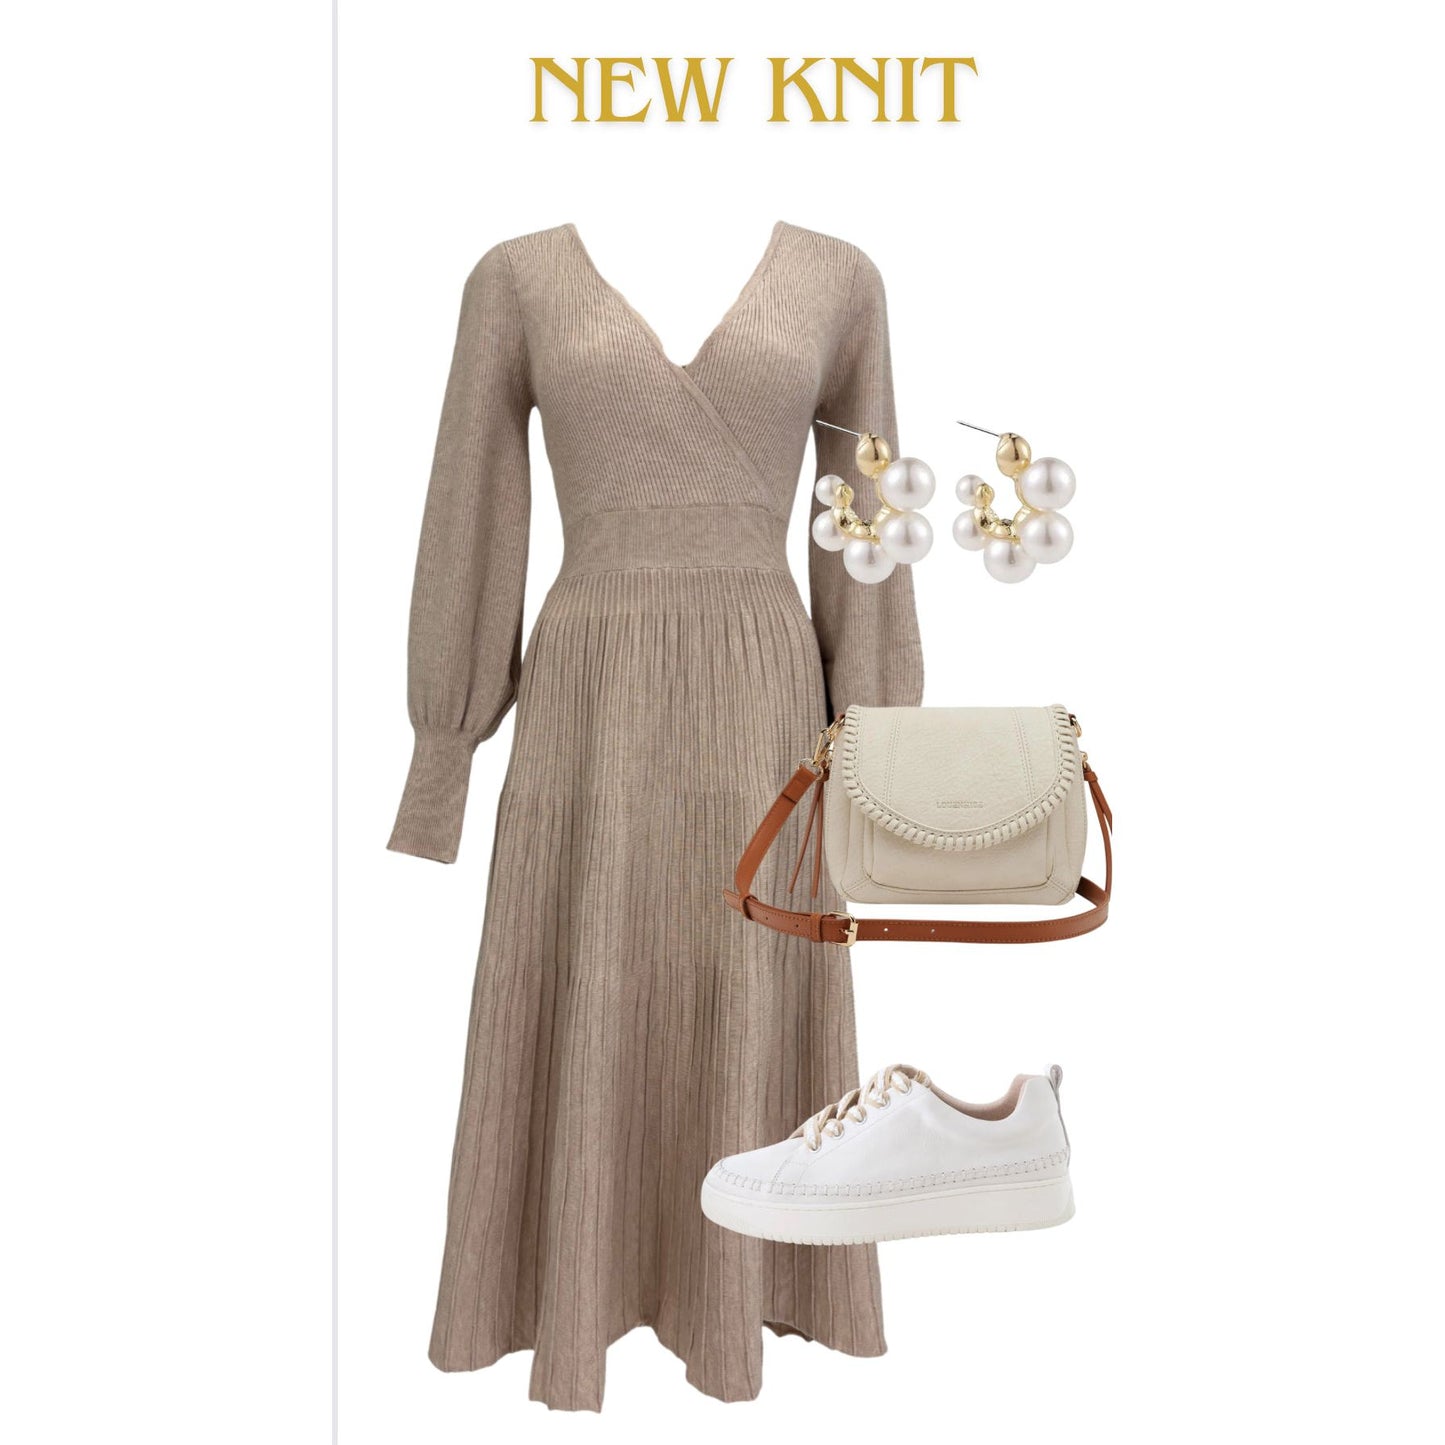 Kyra knit dress